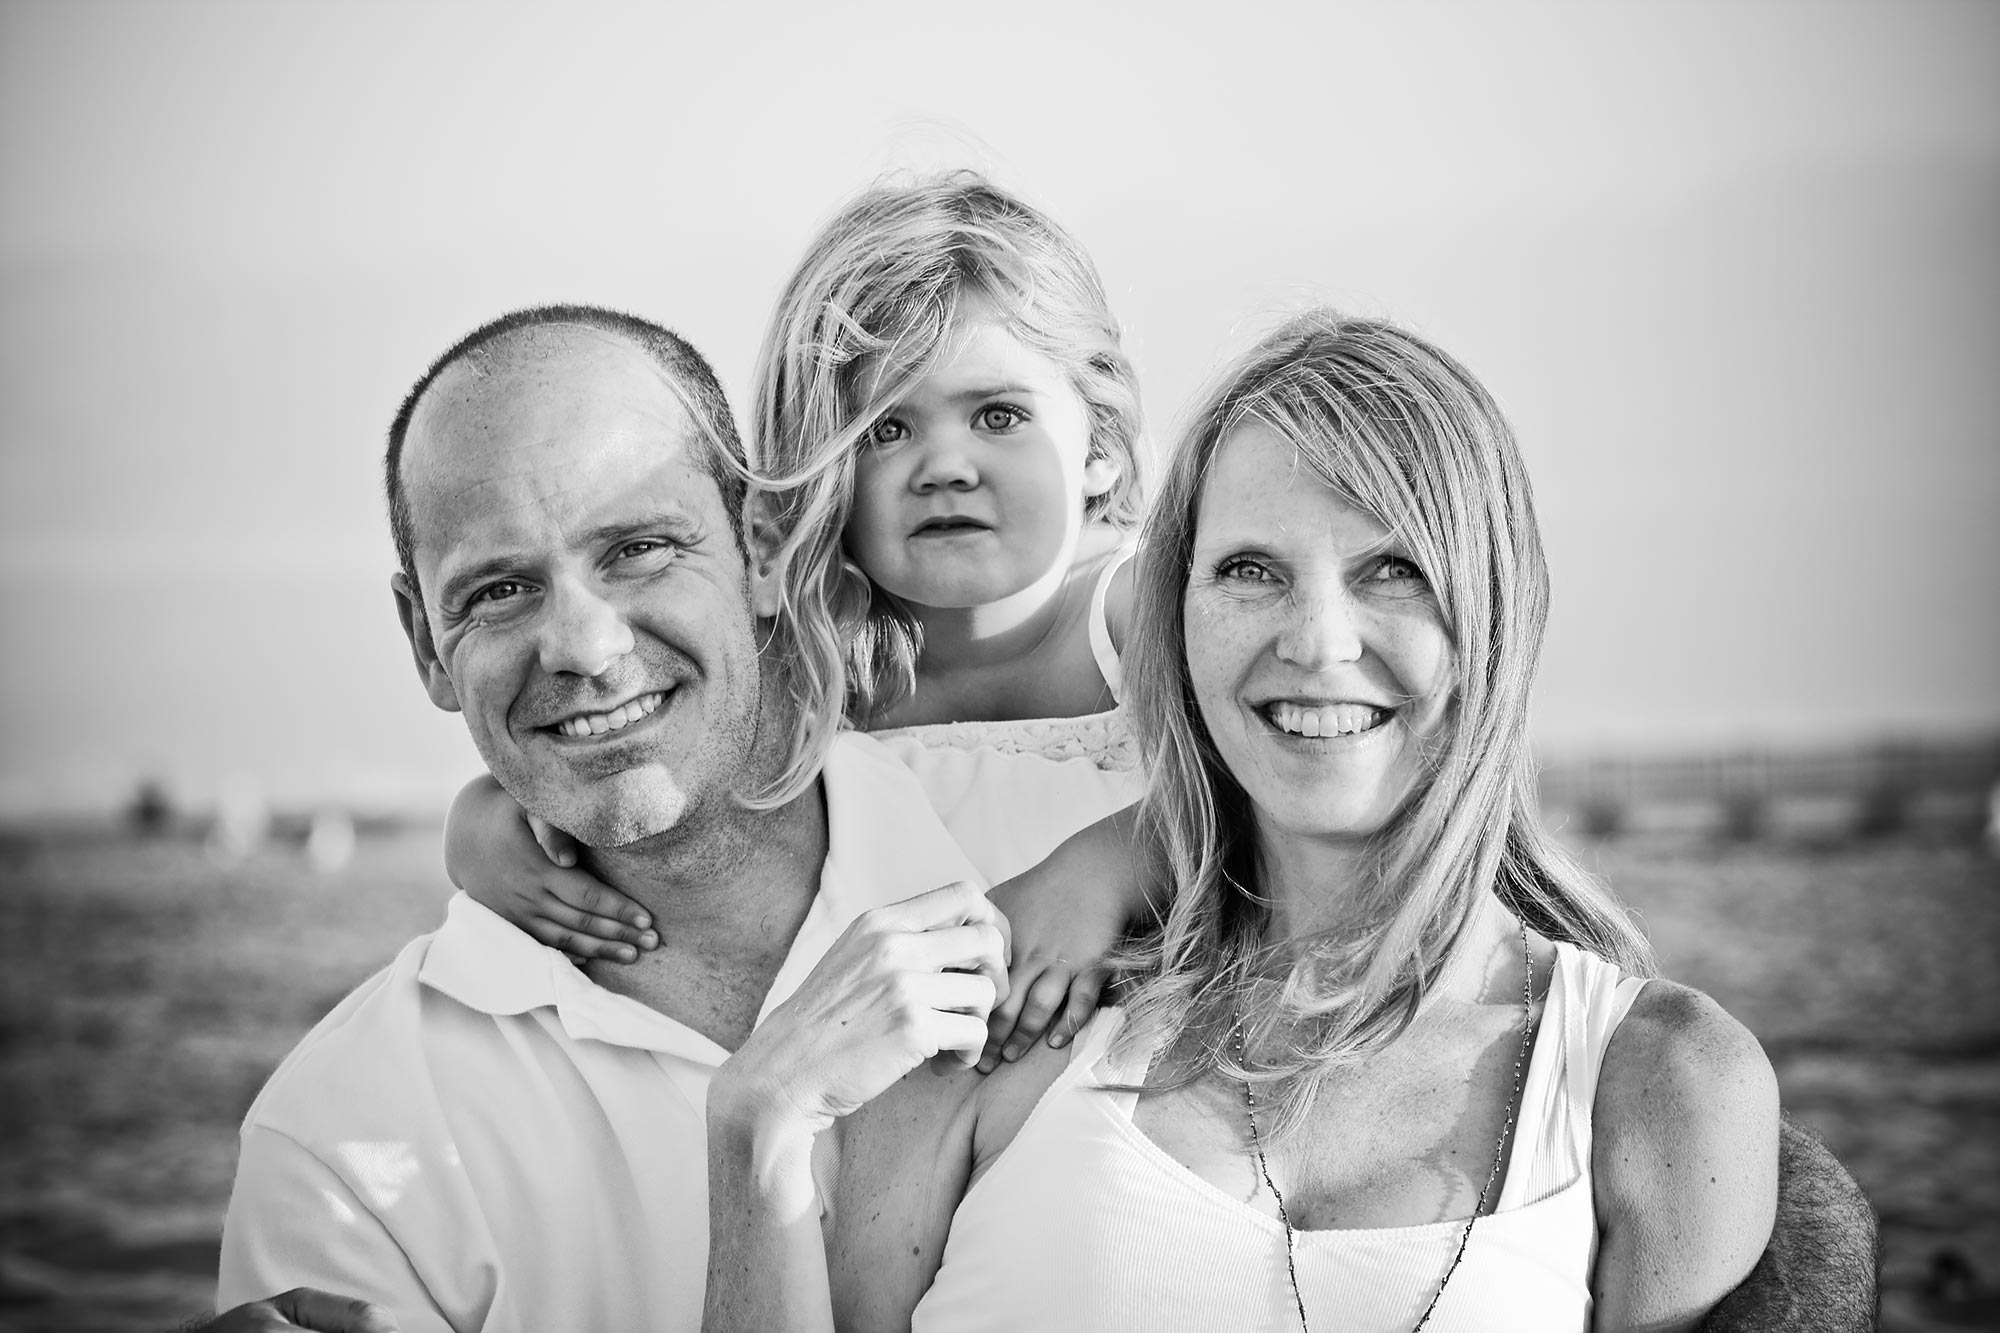 Andover Family Portrait Photographer | Stephen Grant Photography